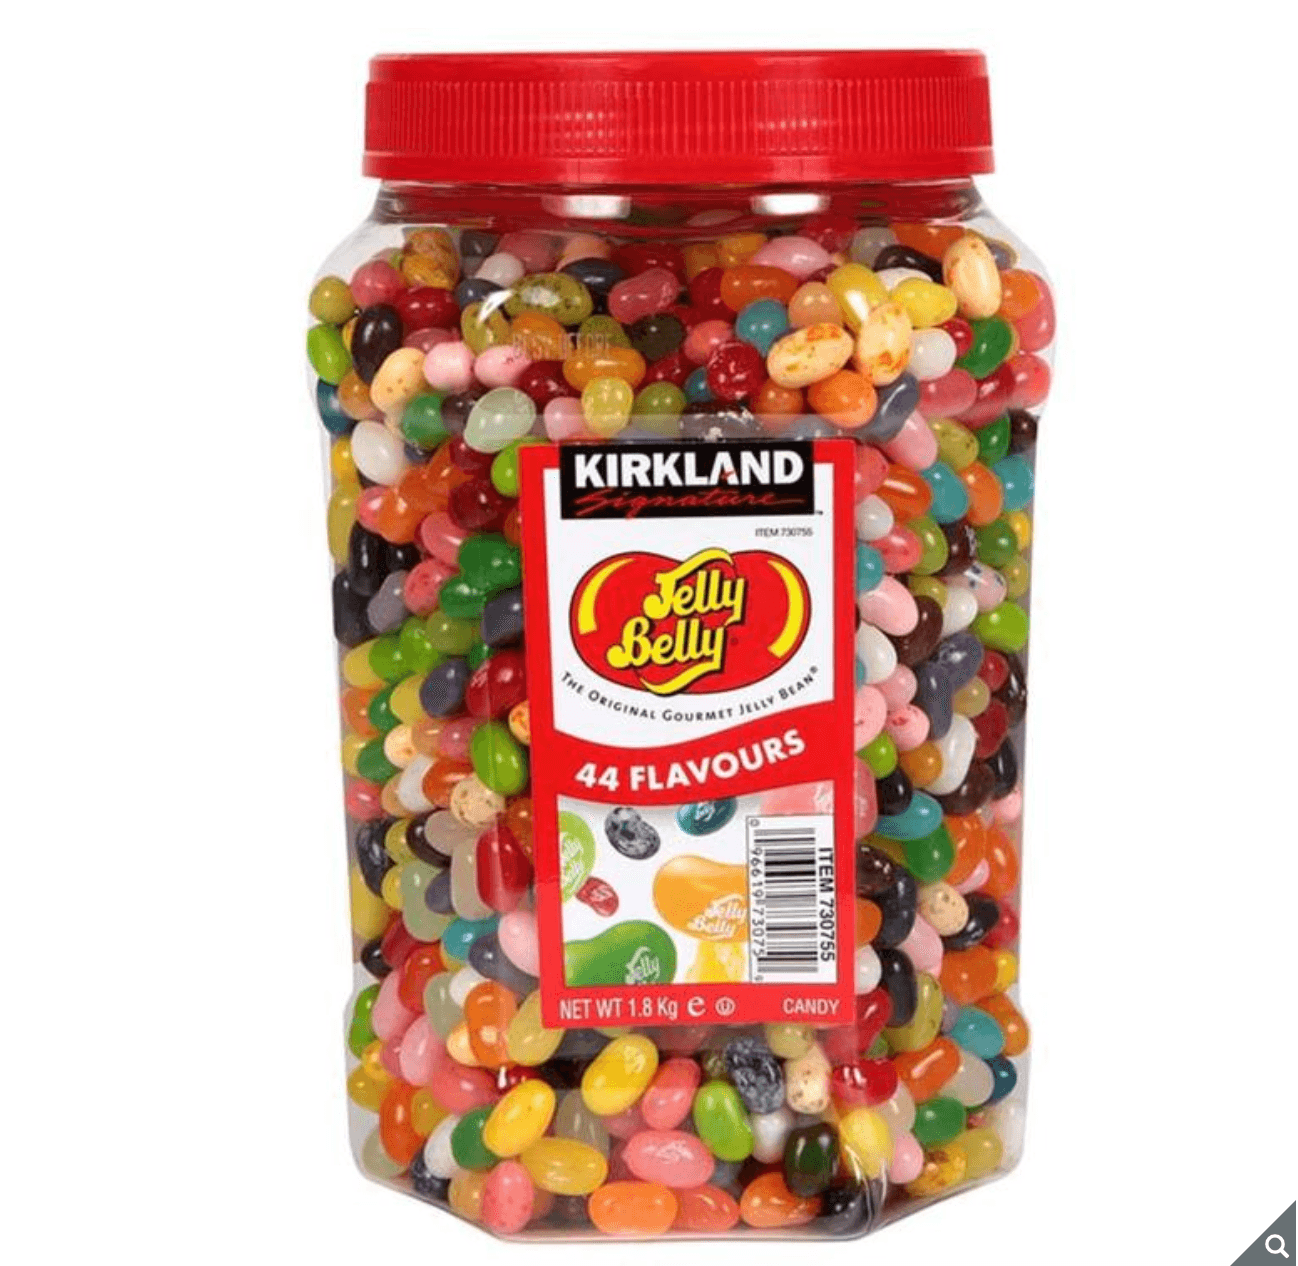 Costco' Kirkland jelly beans